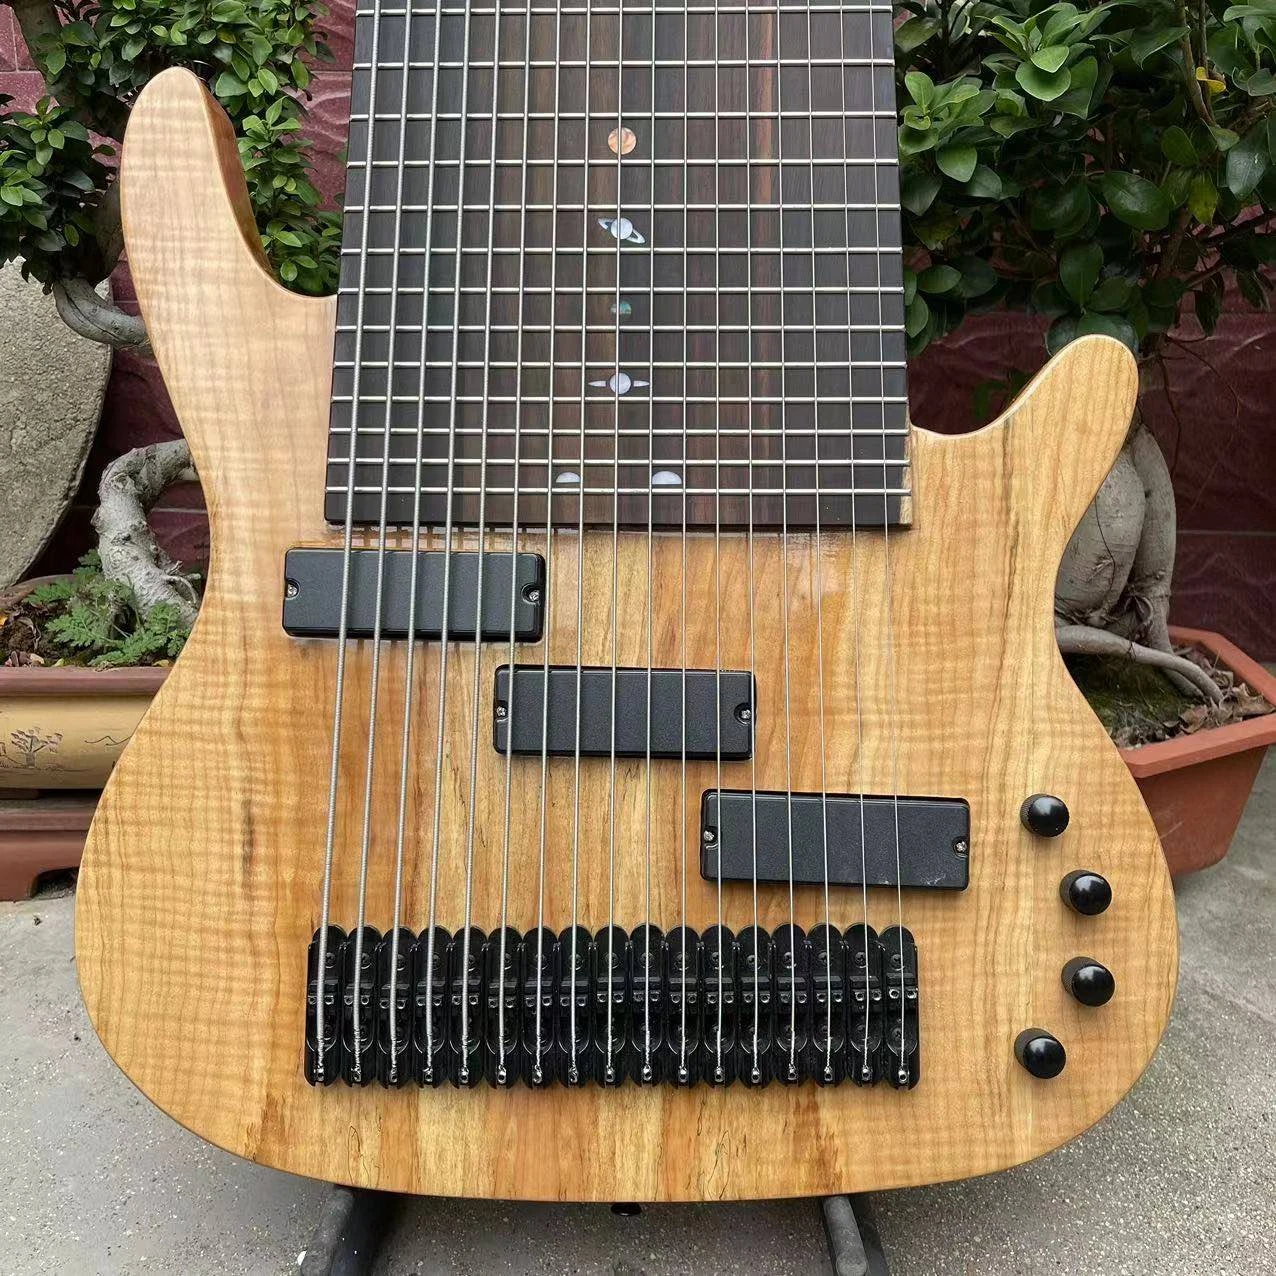 Custom-17-Strings-Neck-Through-Body-Electric-Bass-Guitar.jpg_Q90.jpg_.webp